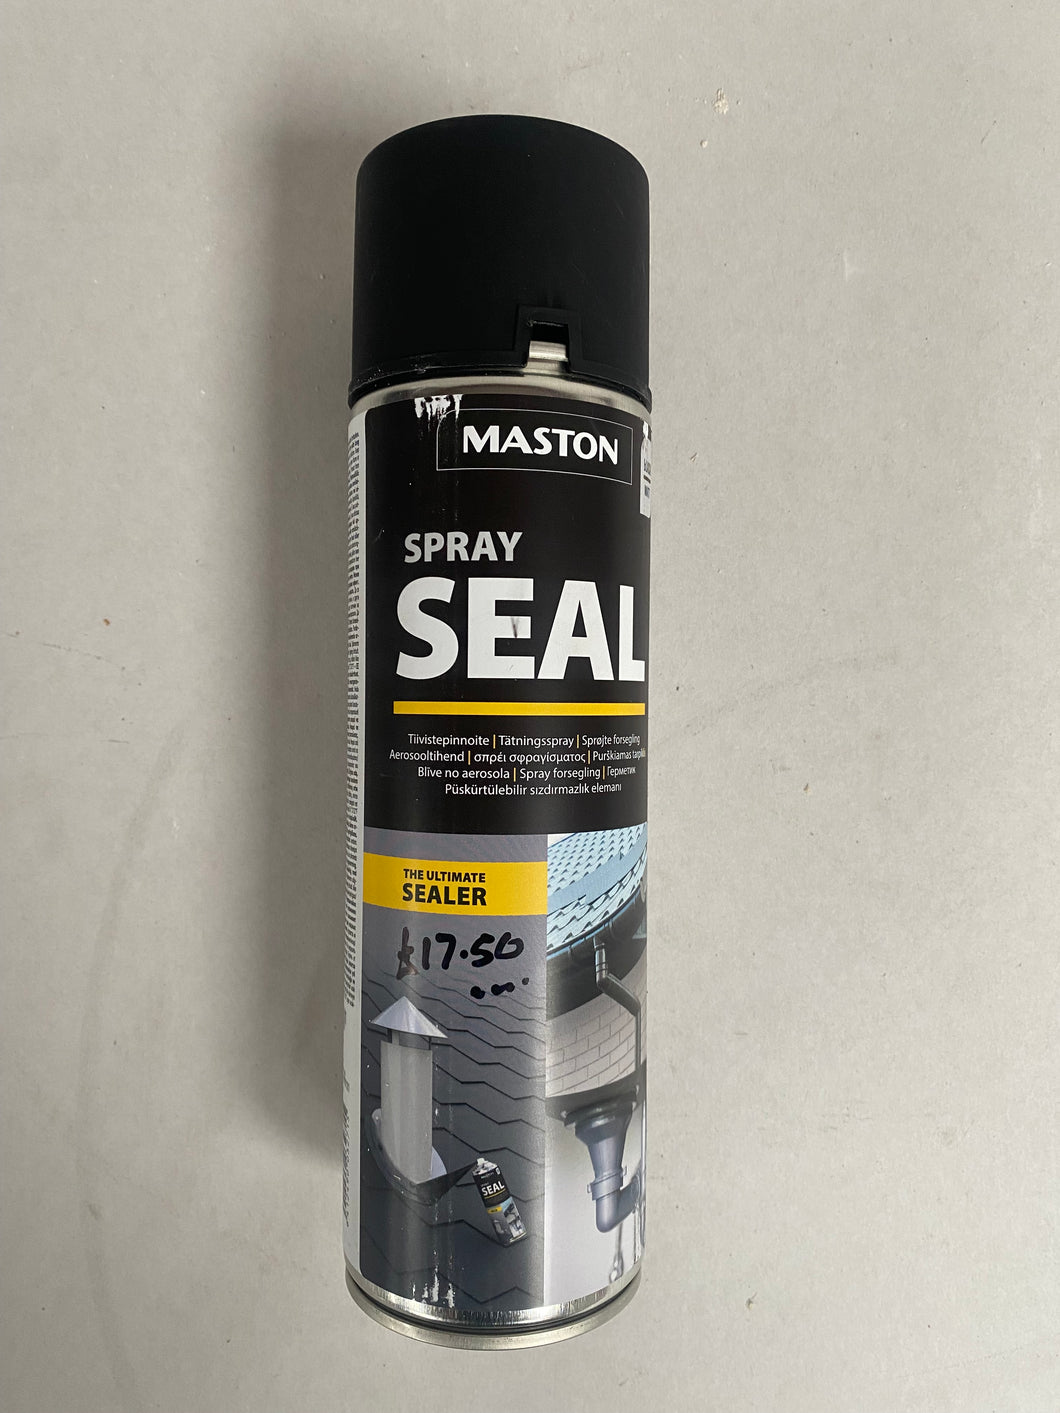 MASTON SPRAY SEAL INSTANT REPAIRS TO LEAKS